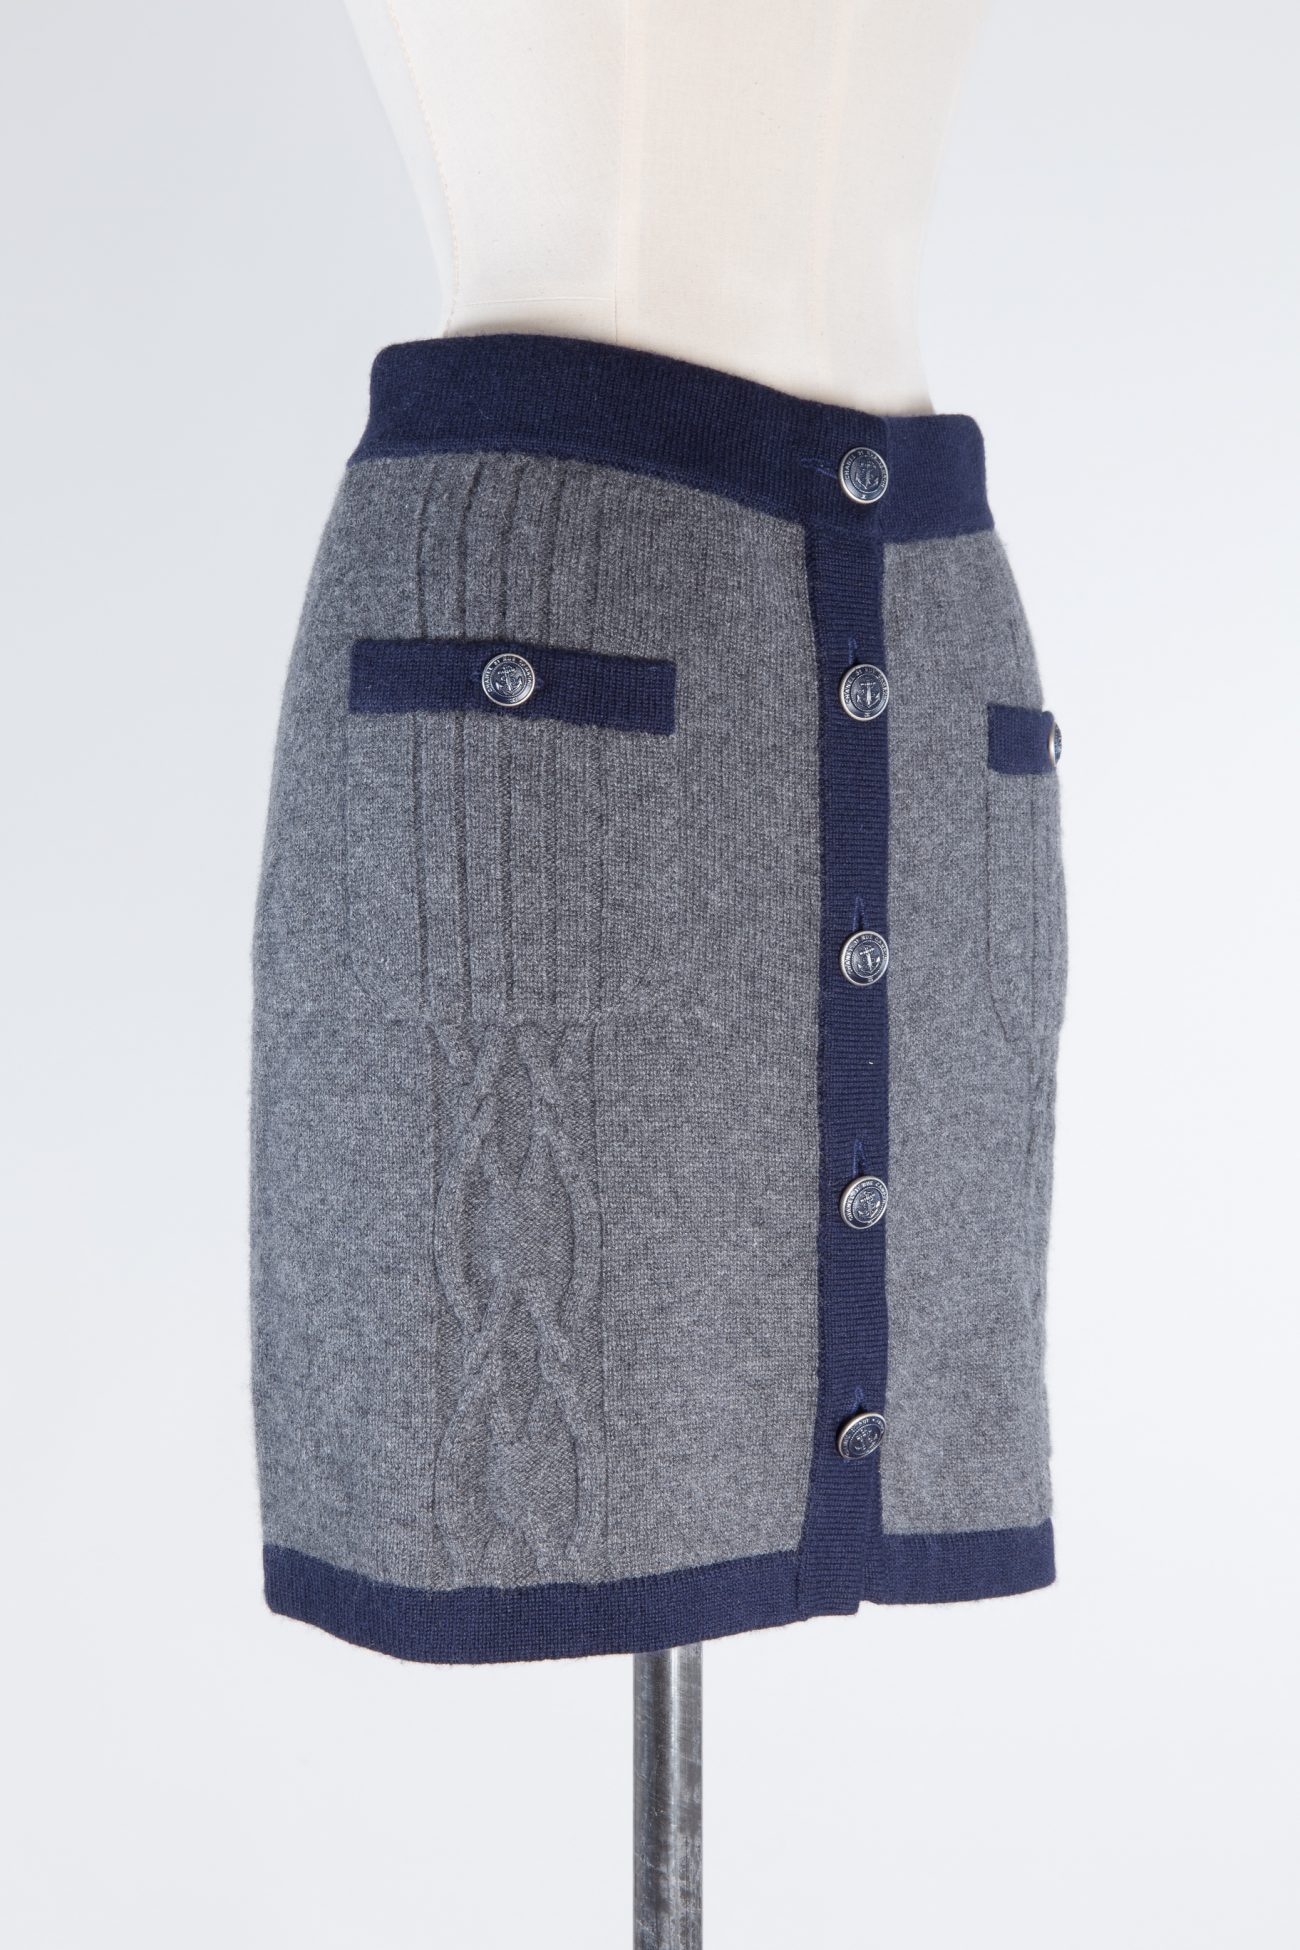 Chanel Knit Skirt 18A